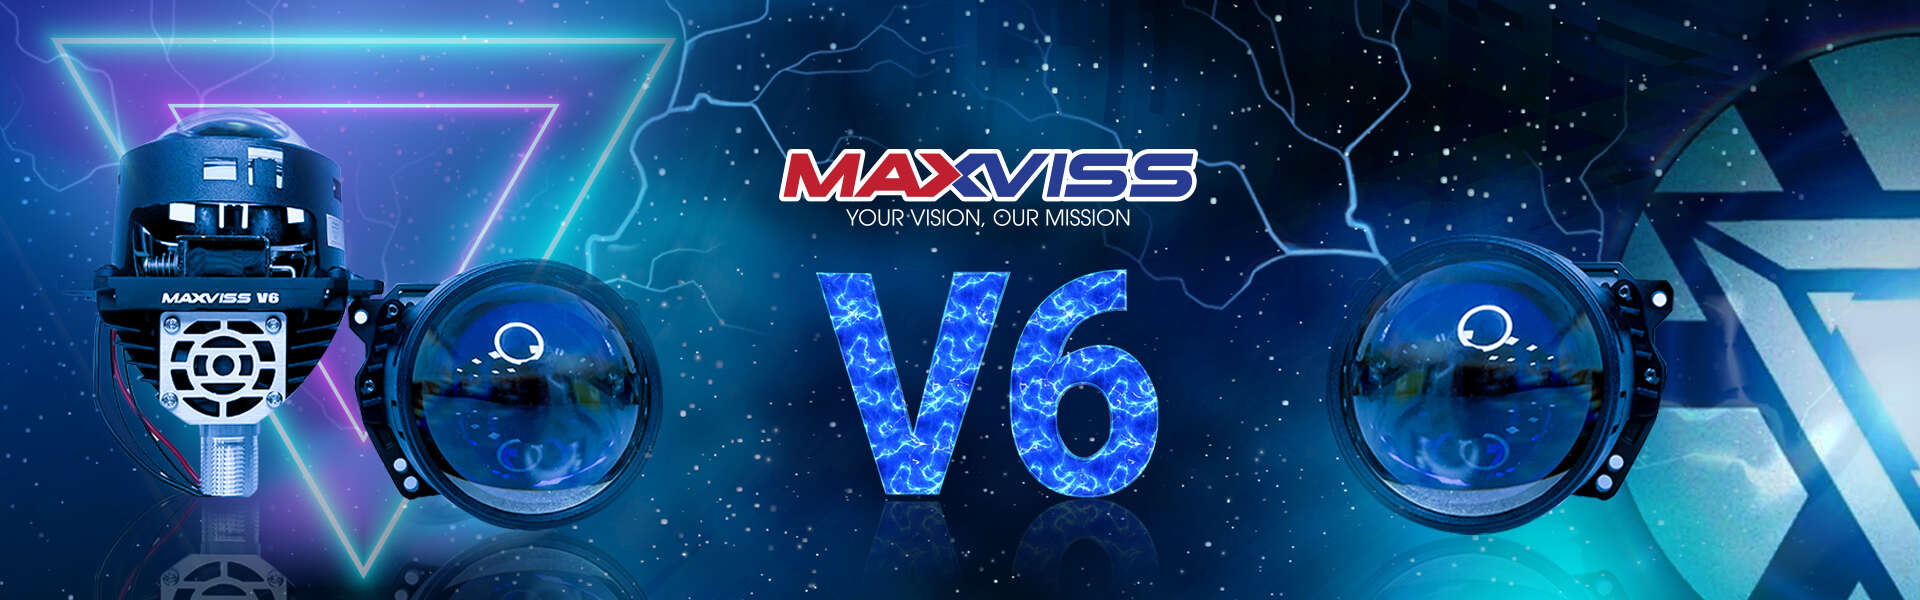 BI LED MAXVISS V6